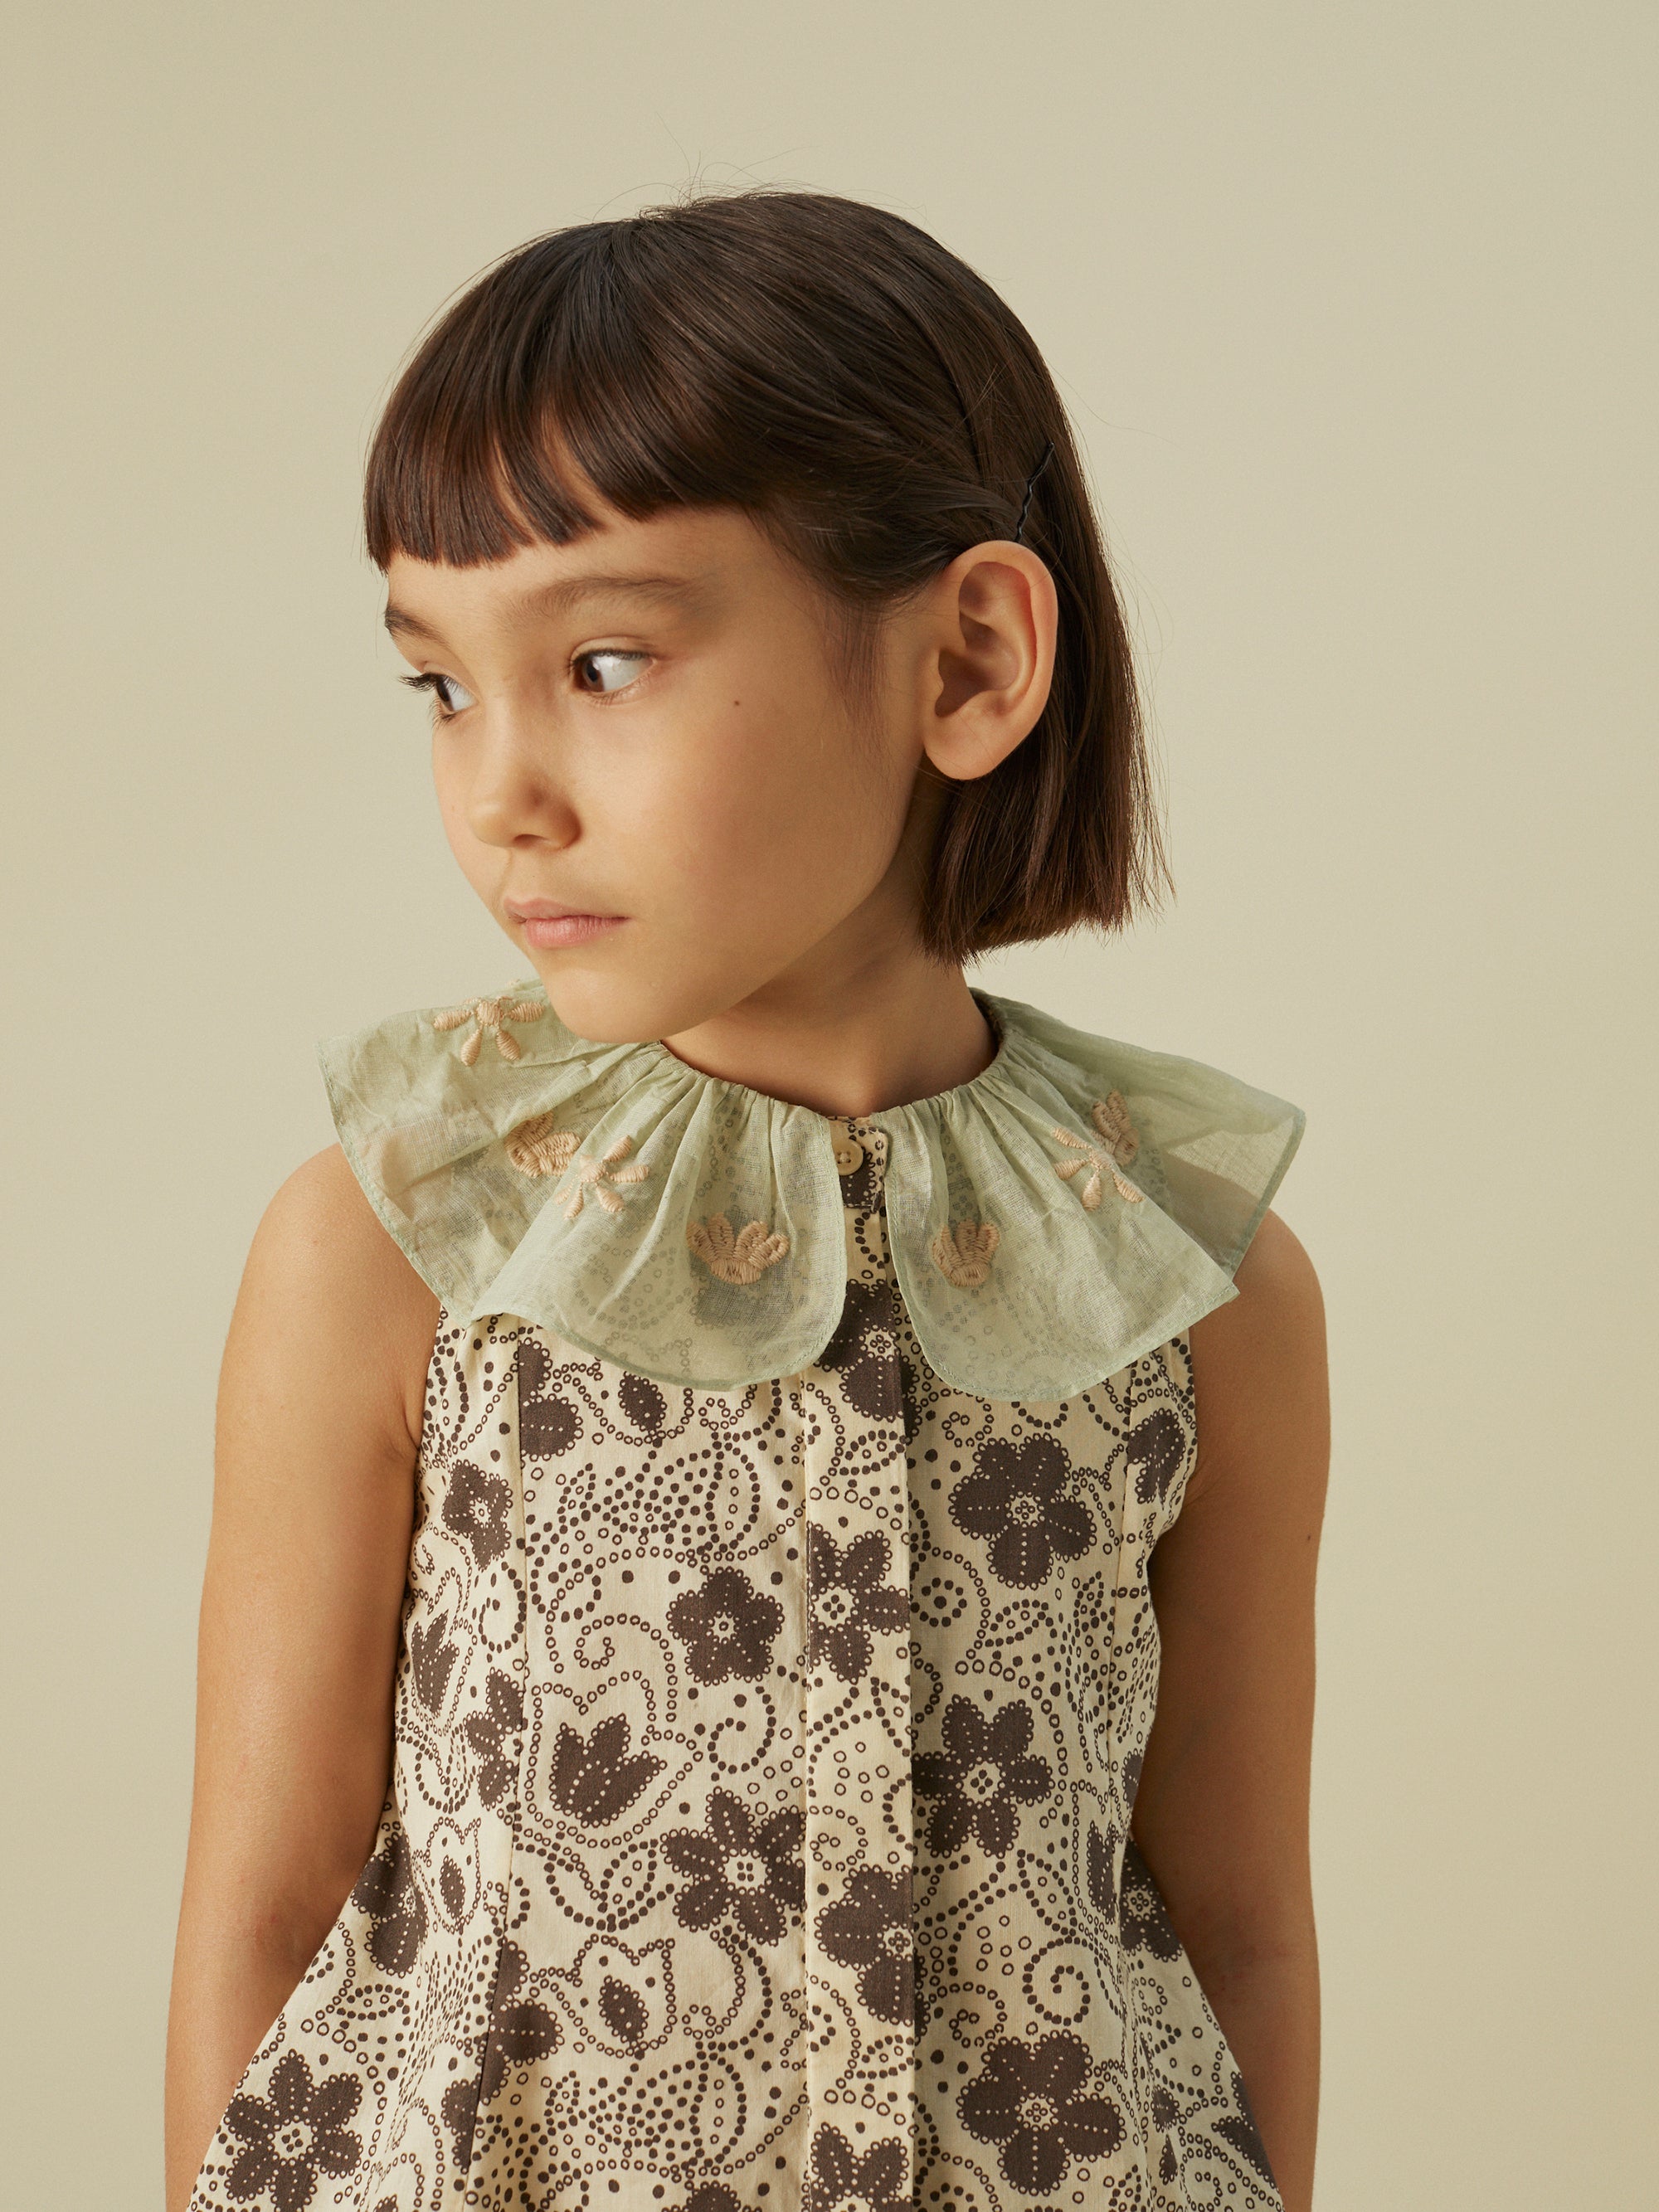 Apolina Gala Kid's Embroidered Dress Bellflower Wren Organic Cotton Poplin Organdie Collar | BIEN BIEN bienbienshop.com